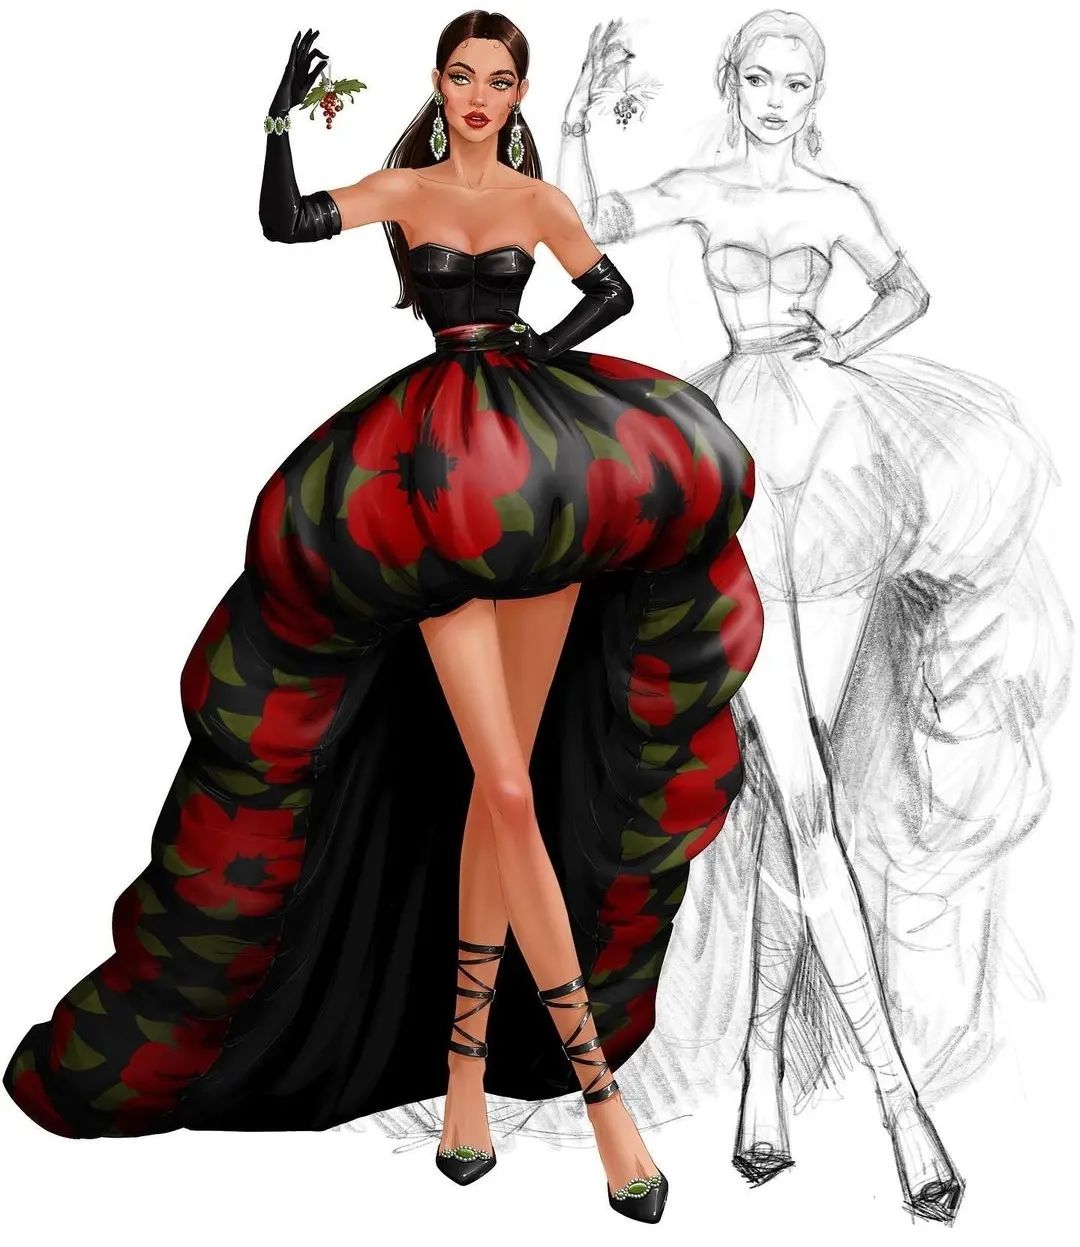 Beautiful dresses fashion illustration by Tess on Trendy Art Ideas